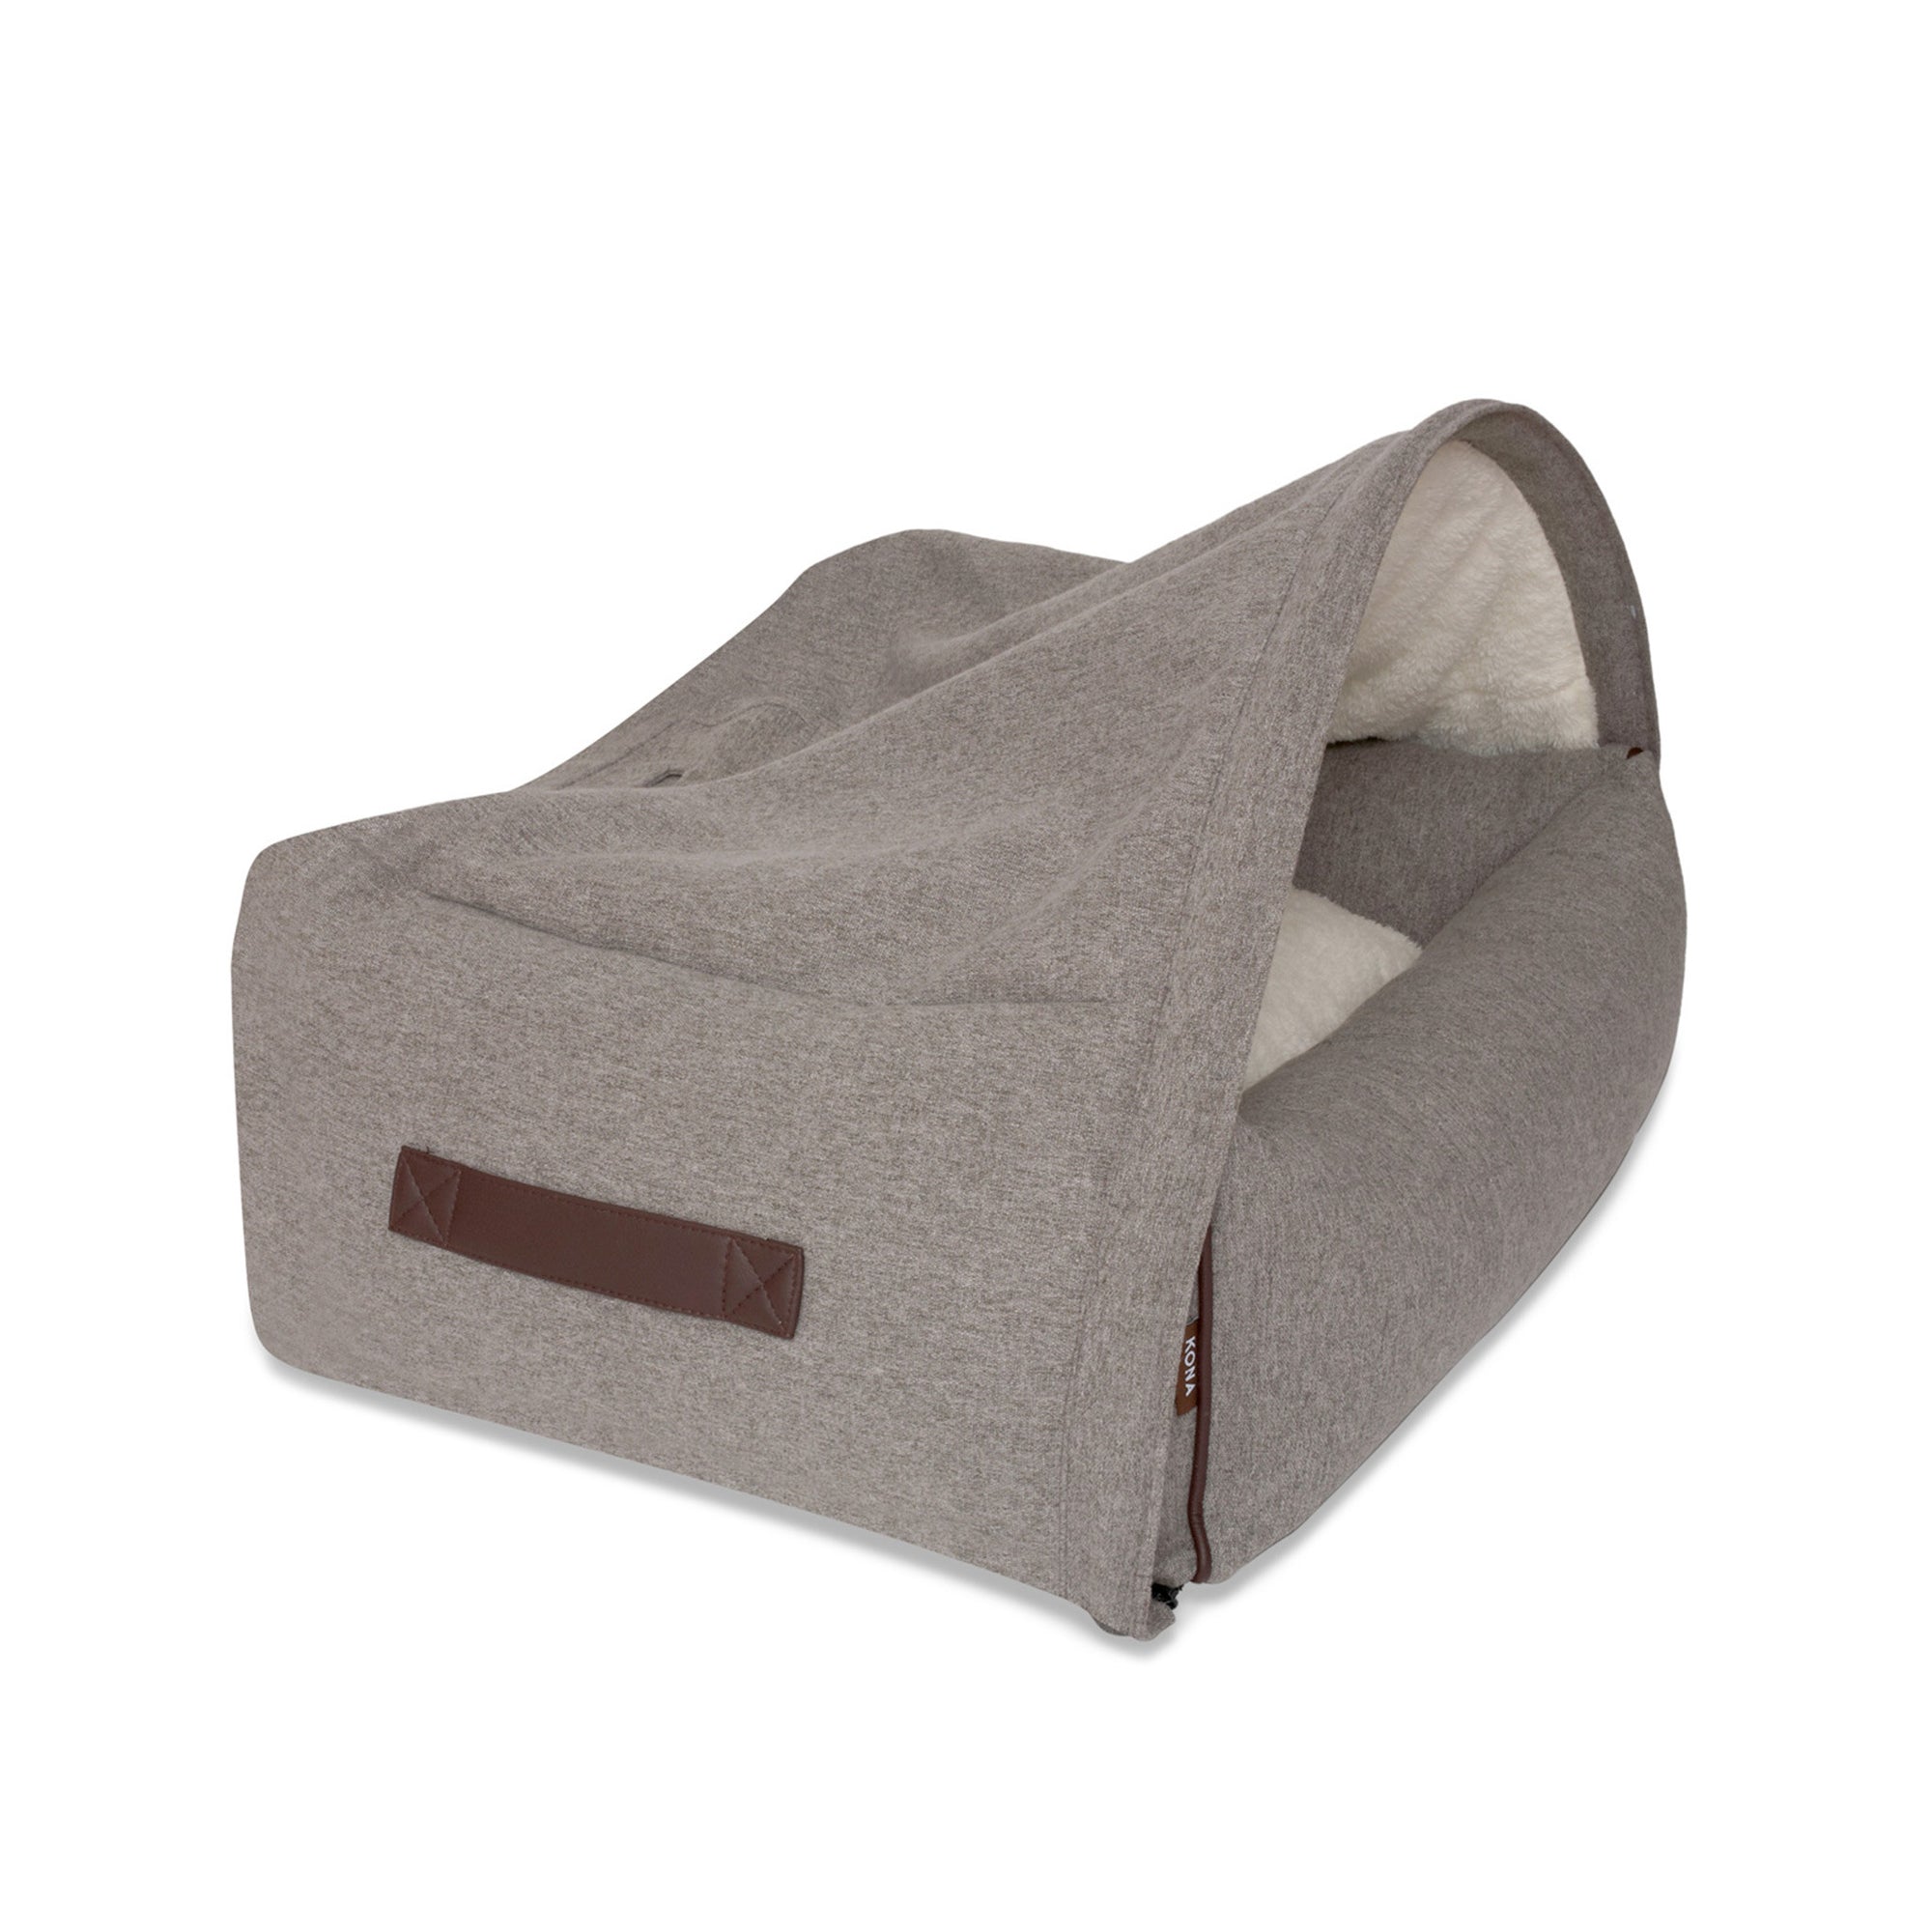 KONA CAVE® designer snuggle cave dog bed in flannel fabric. Grey igloo dog bed for dog snoozers. Hund Höhlenbett